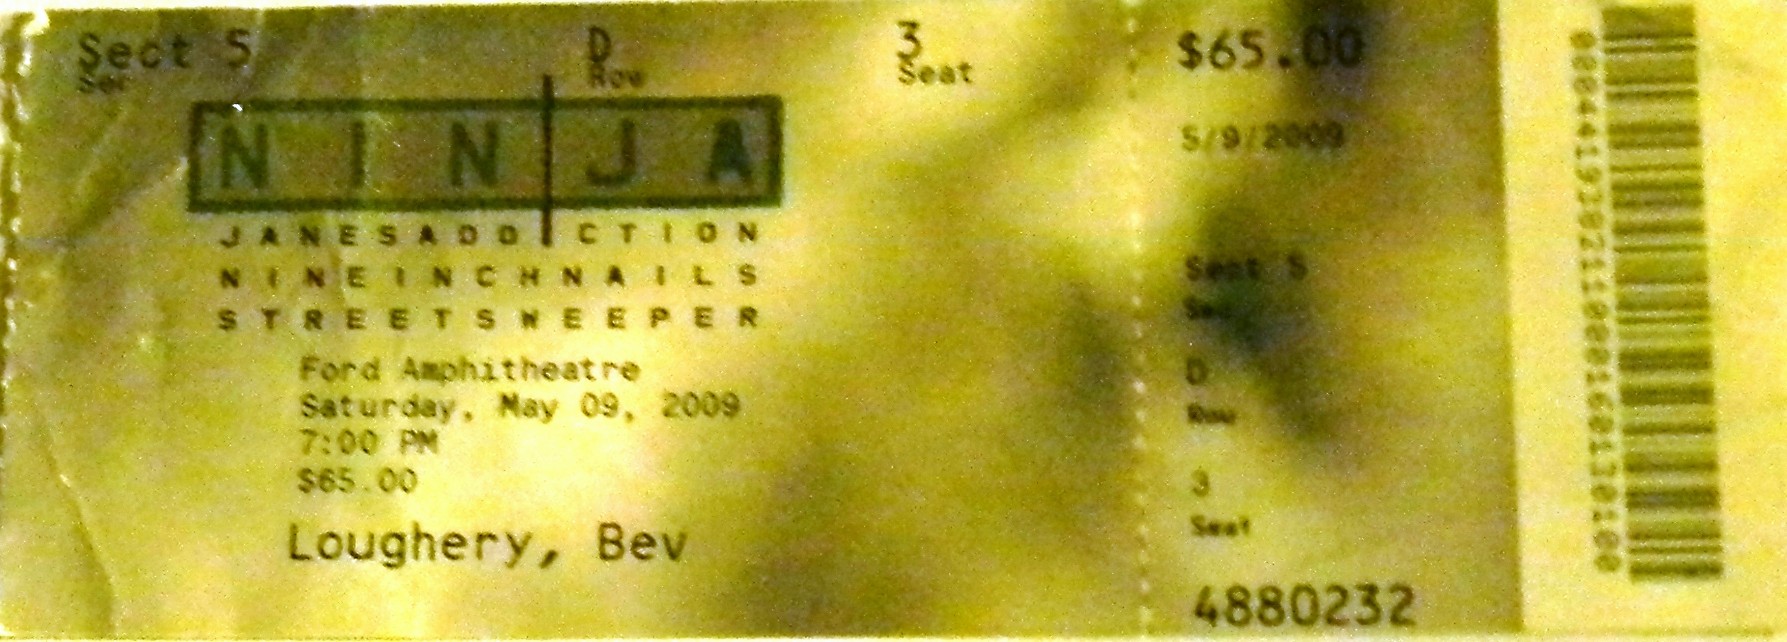 2009/05/09 Ticket